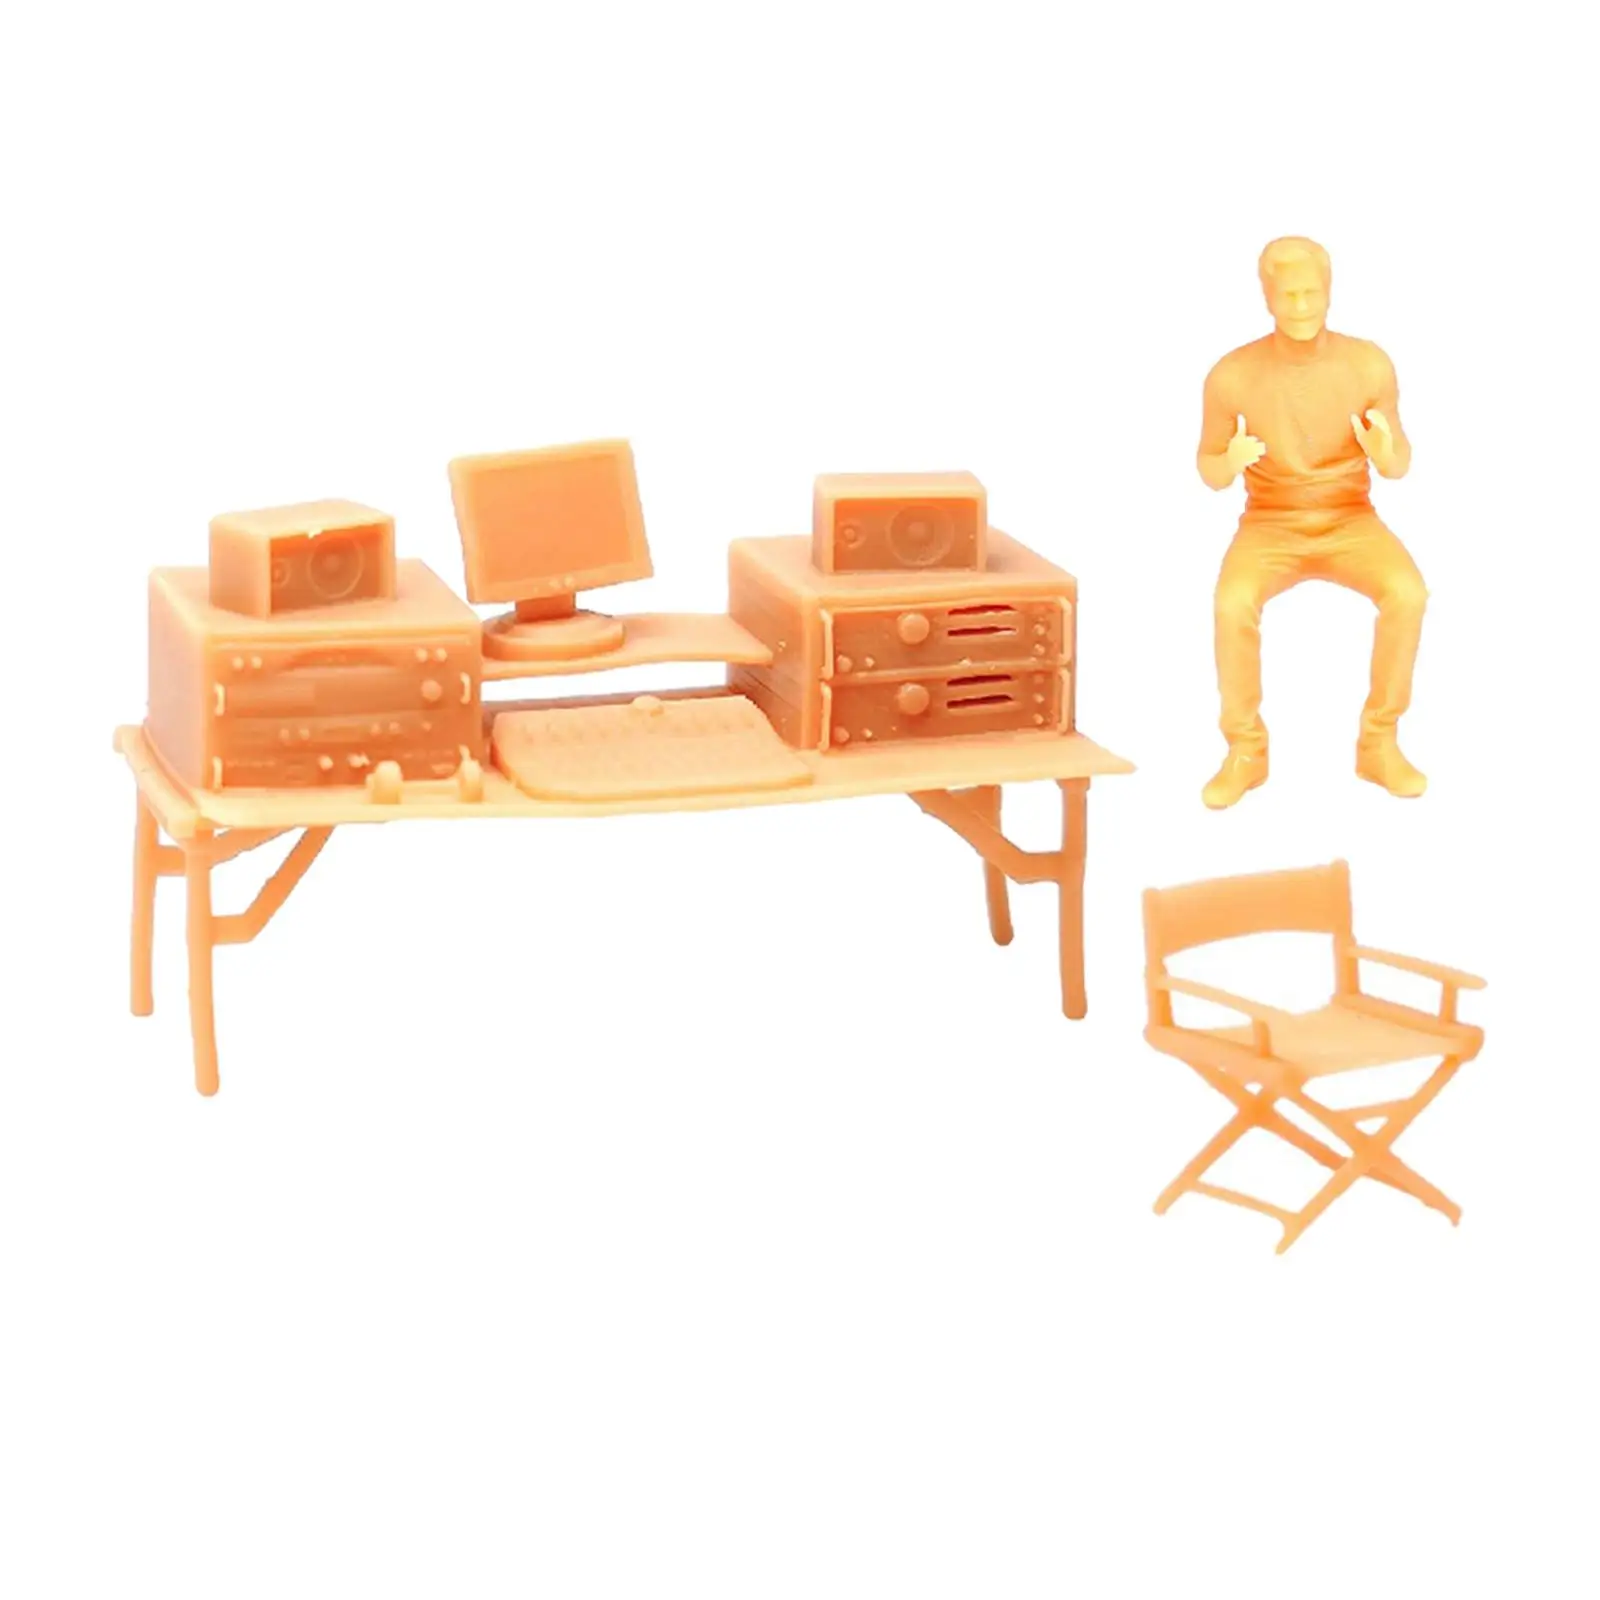 Resin 1/64 People Figures Miniature People Model Chair Model Desk Model for